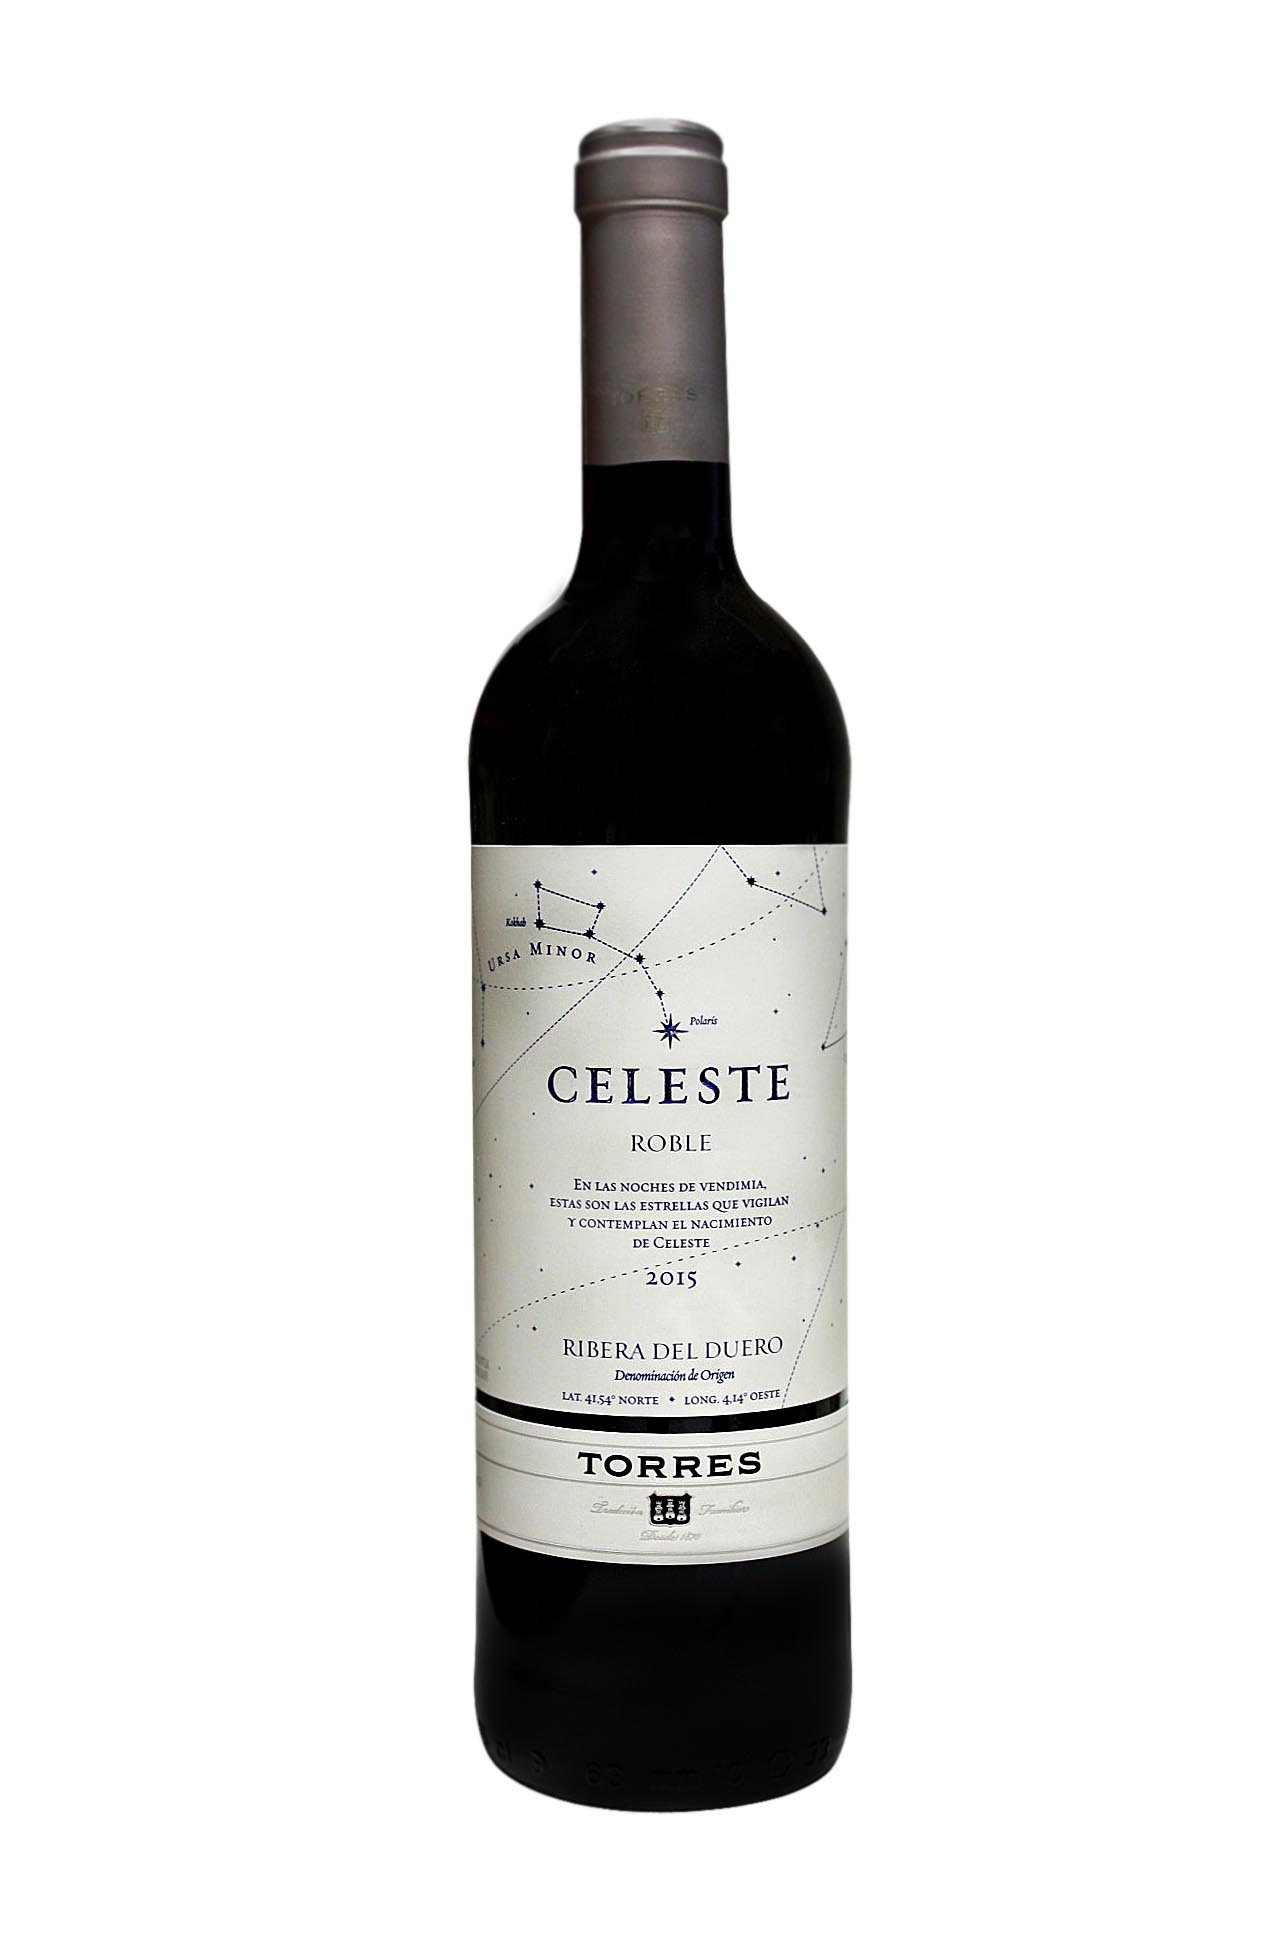 Celeste red wine